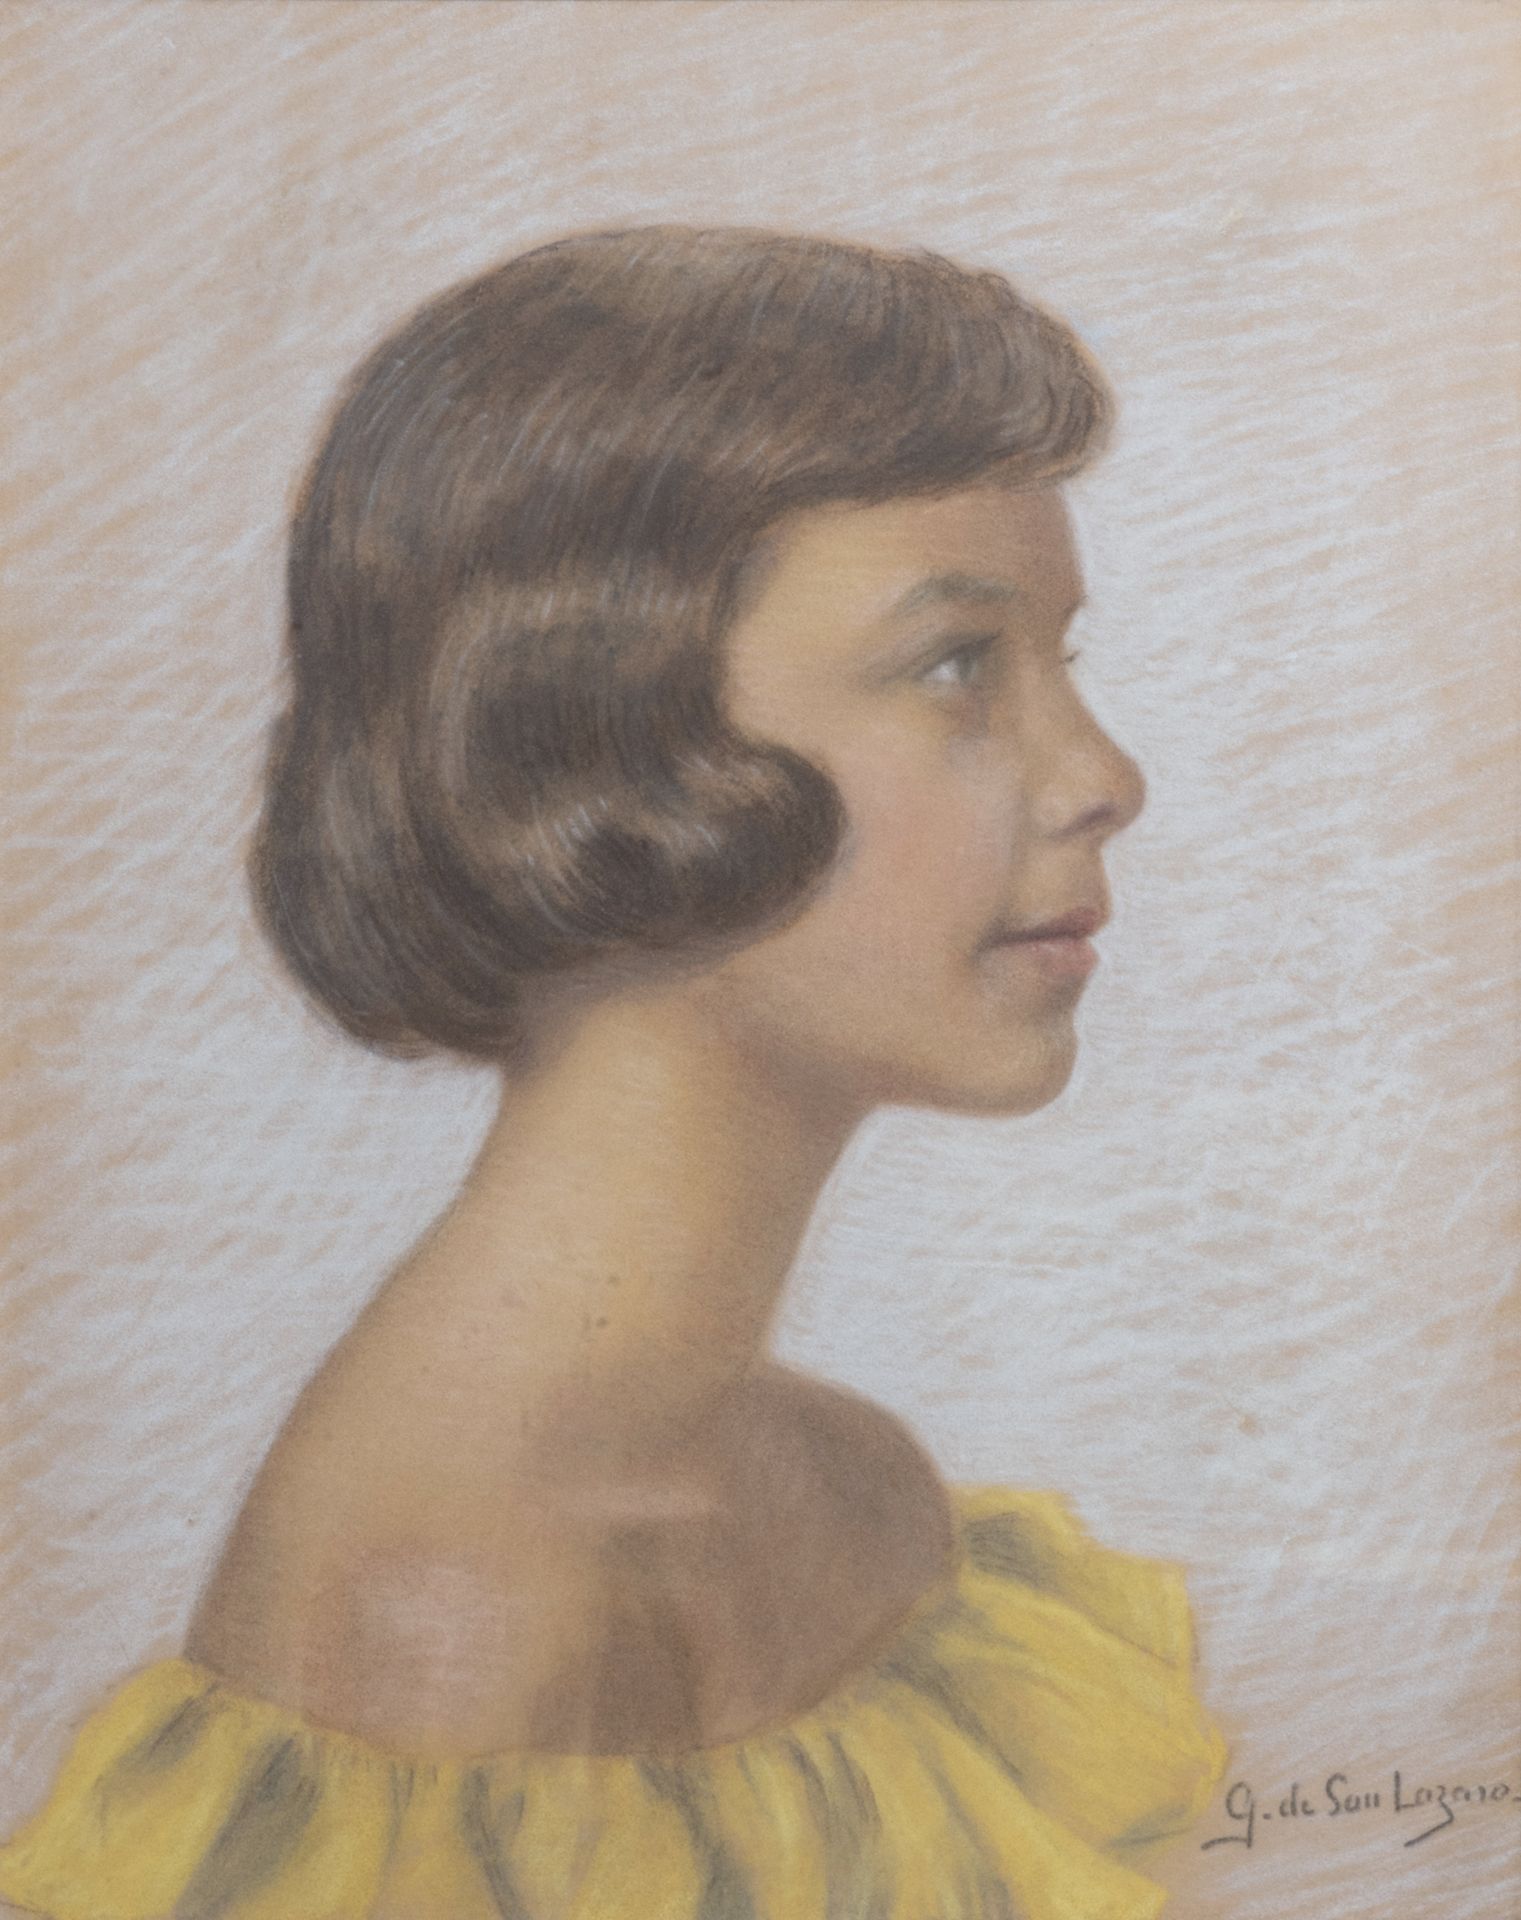 G. De SAN LAZARO G. De SAN LAZARO.
一个年轻女孩的肖像。粉彩画。已签名。38 x 31厘米。